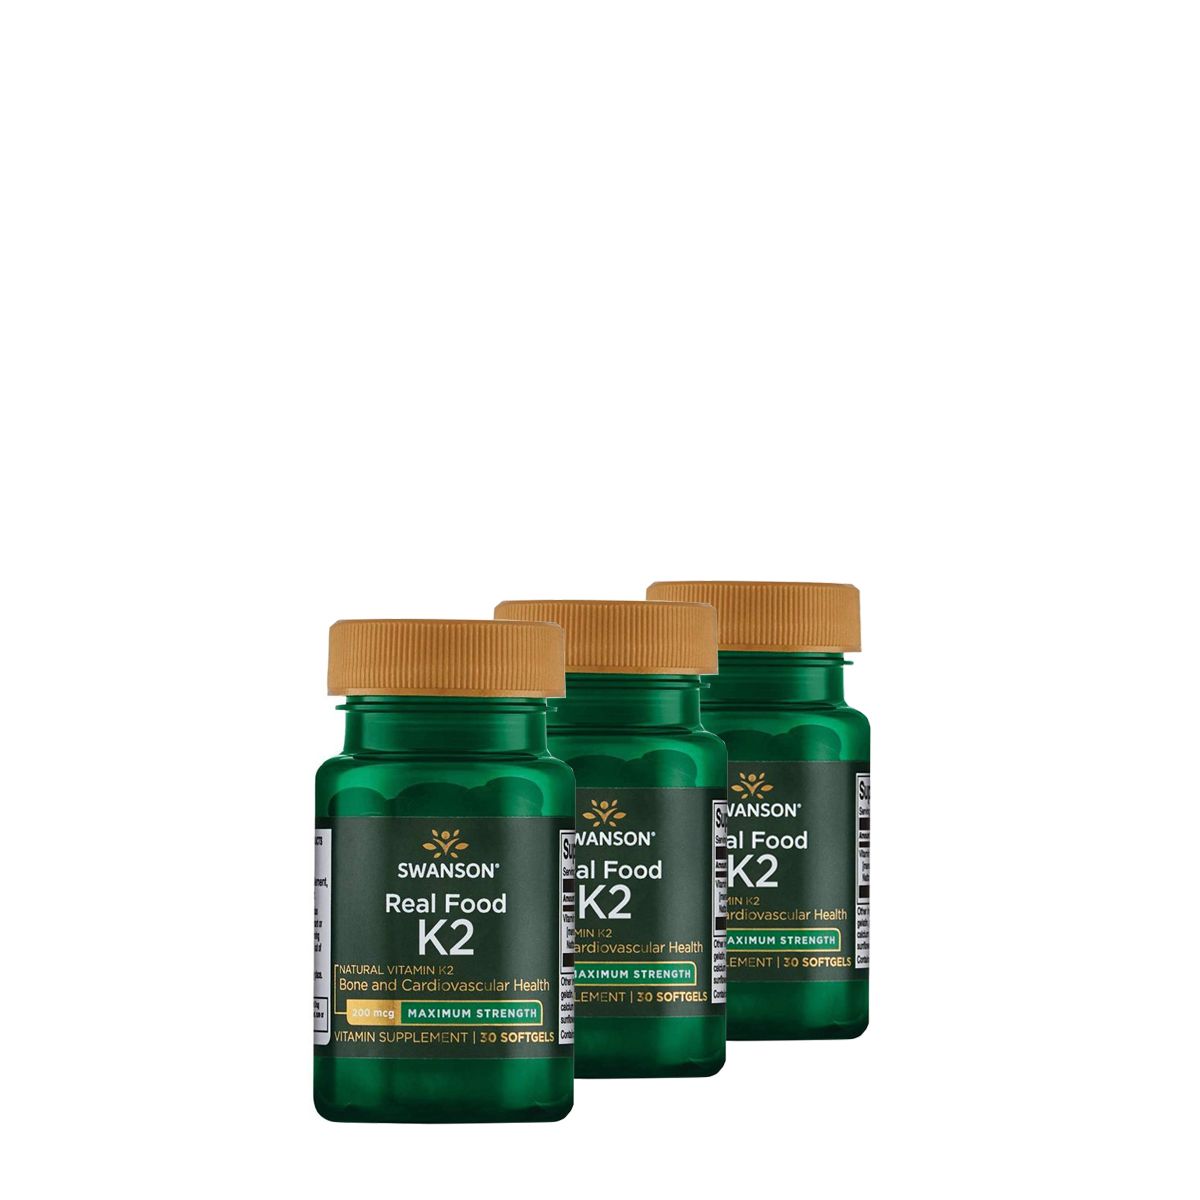 Természetes K2 200 mcg, Swanson Natural Vitamin K2 Menaquinone-7, 3x30 gélkapszula